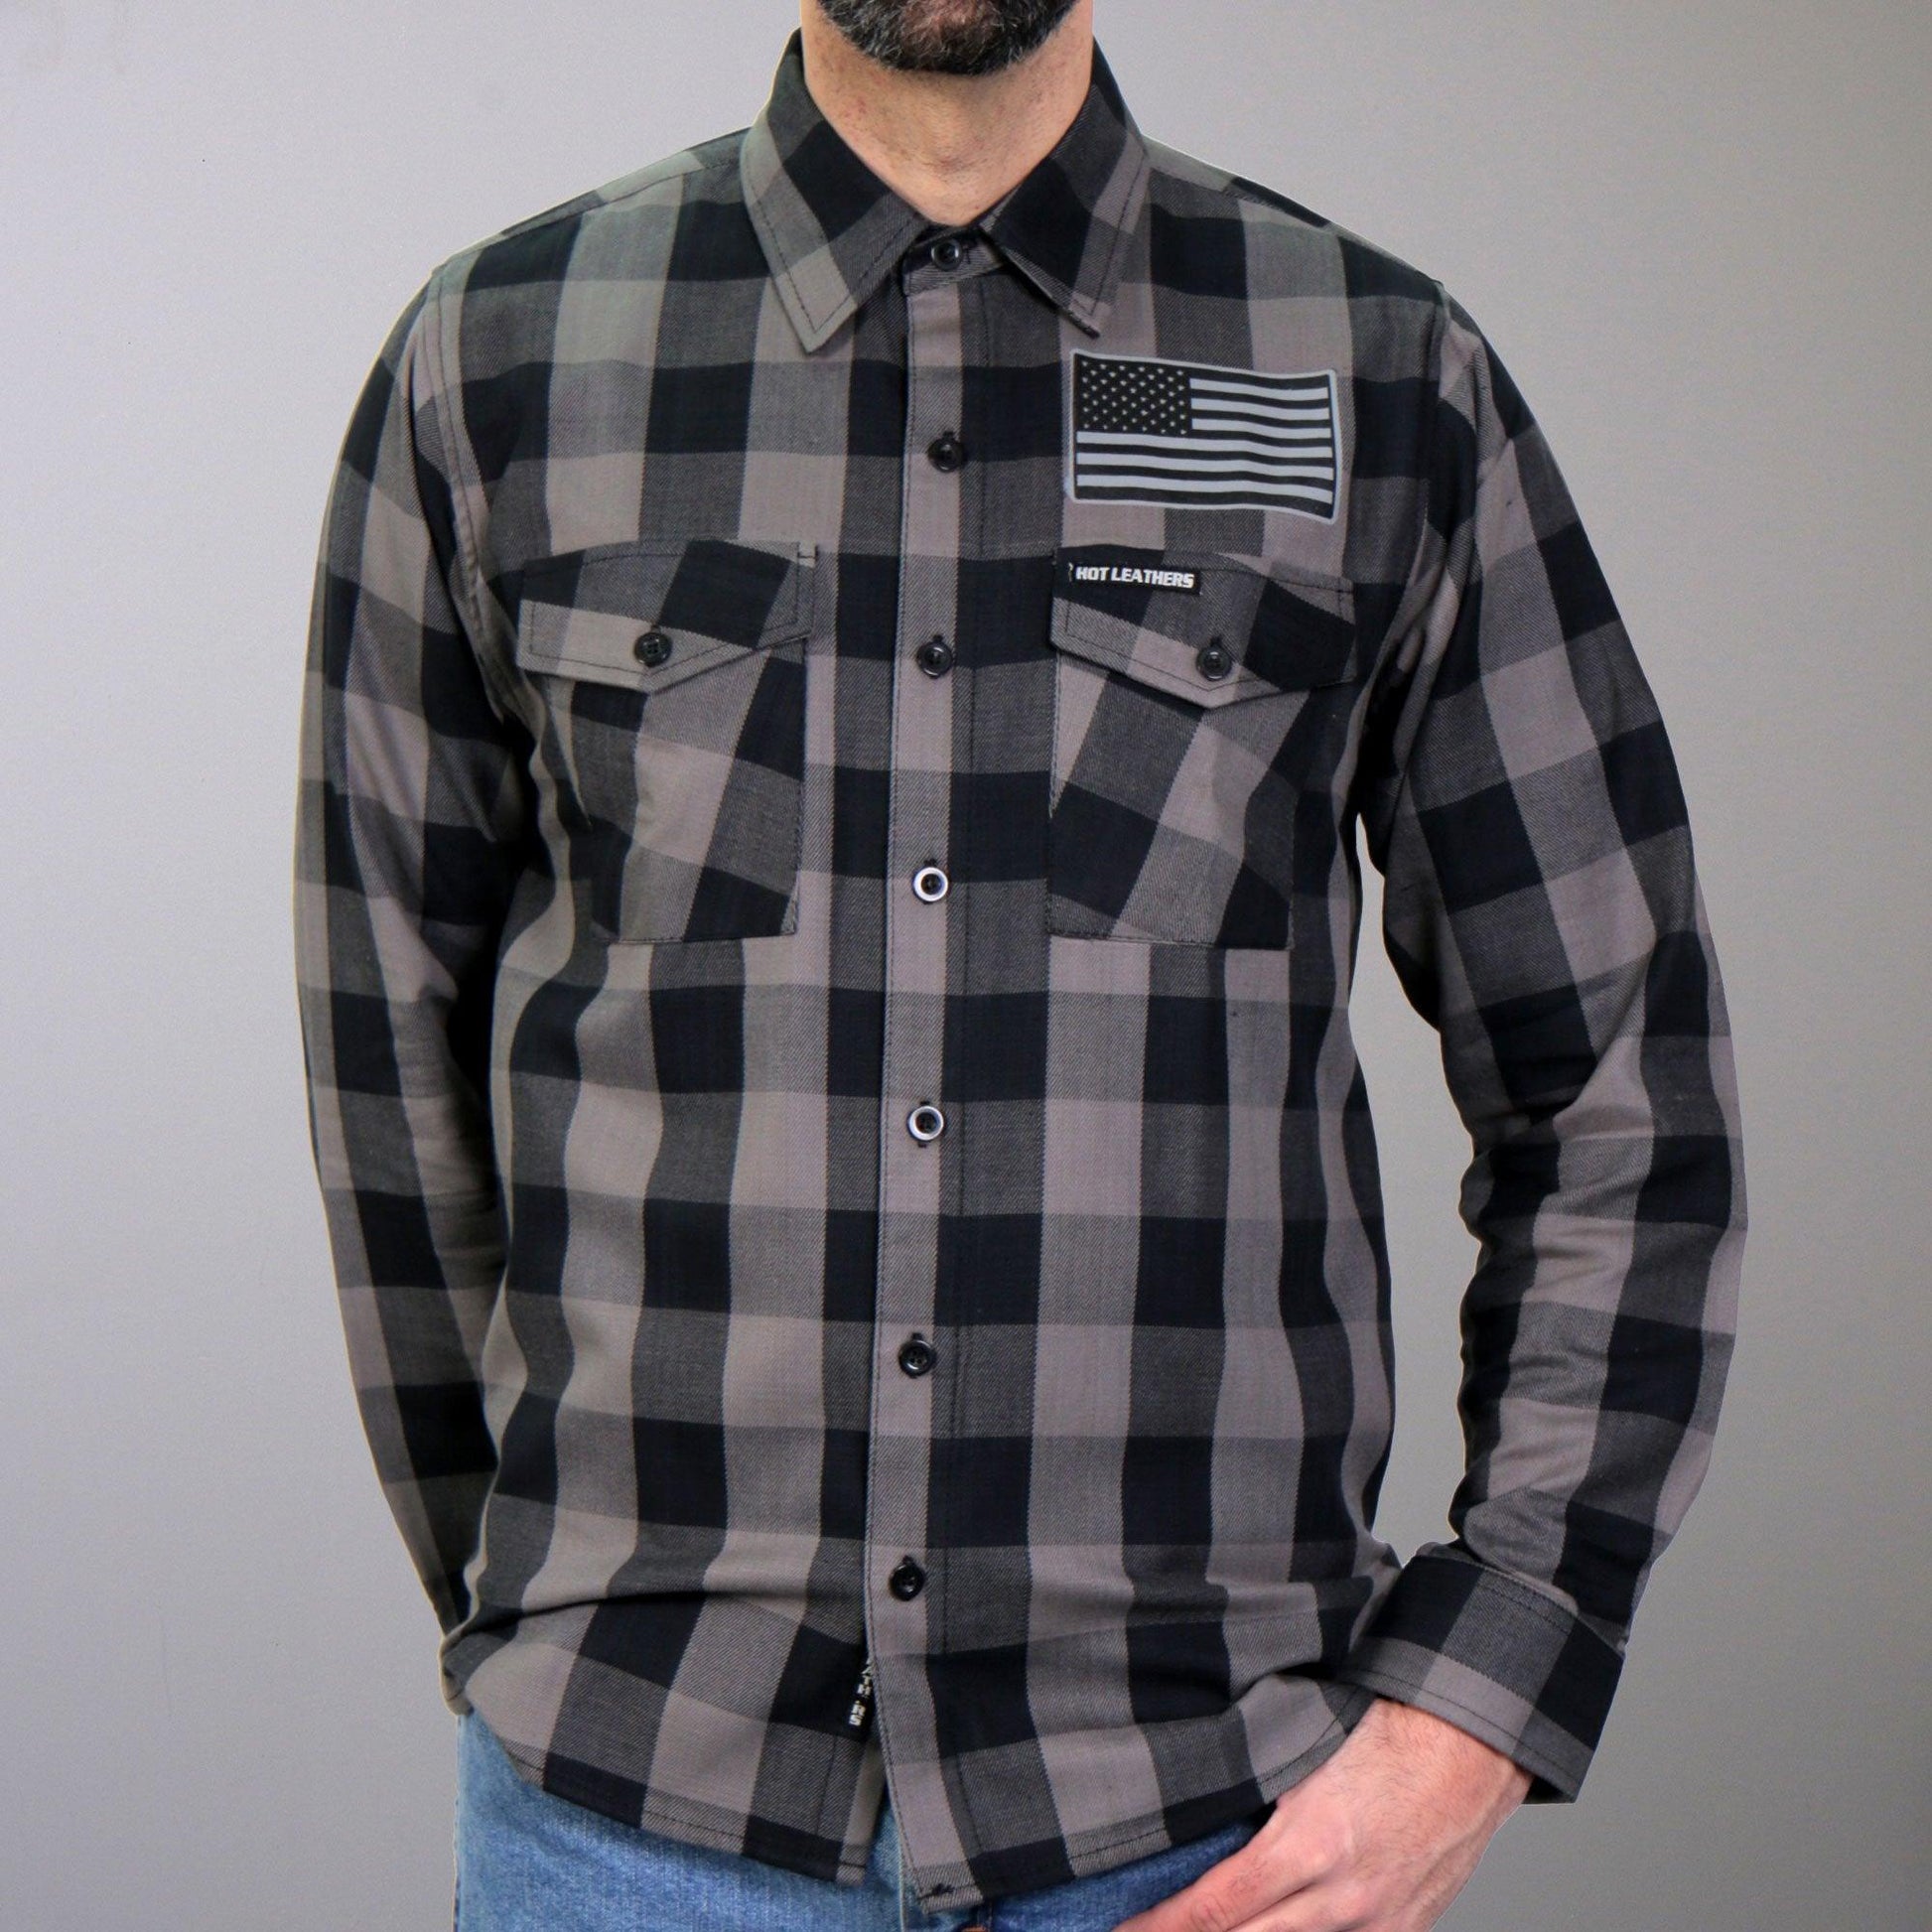 Long Sleeve Tribal Eagle Biker Flannel Shirt for Men - Military Republic